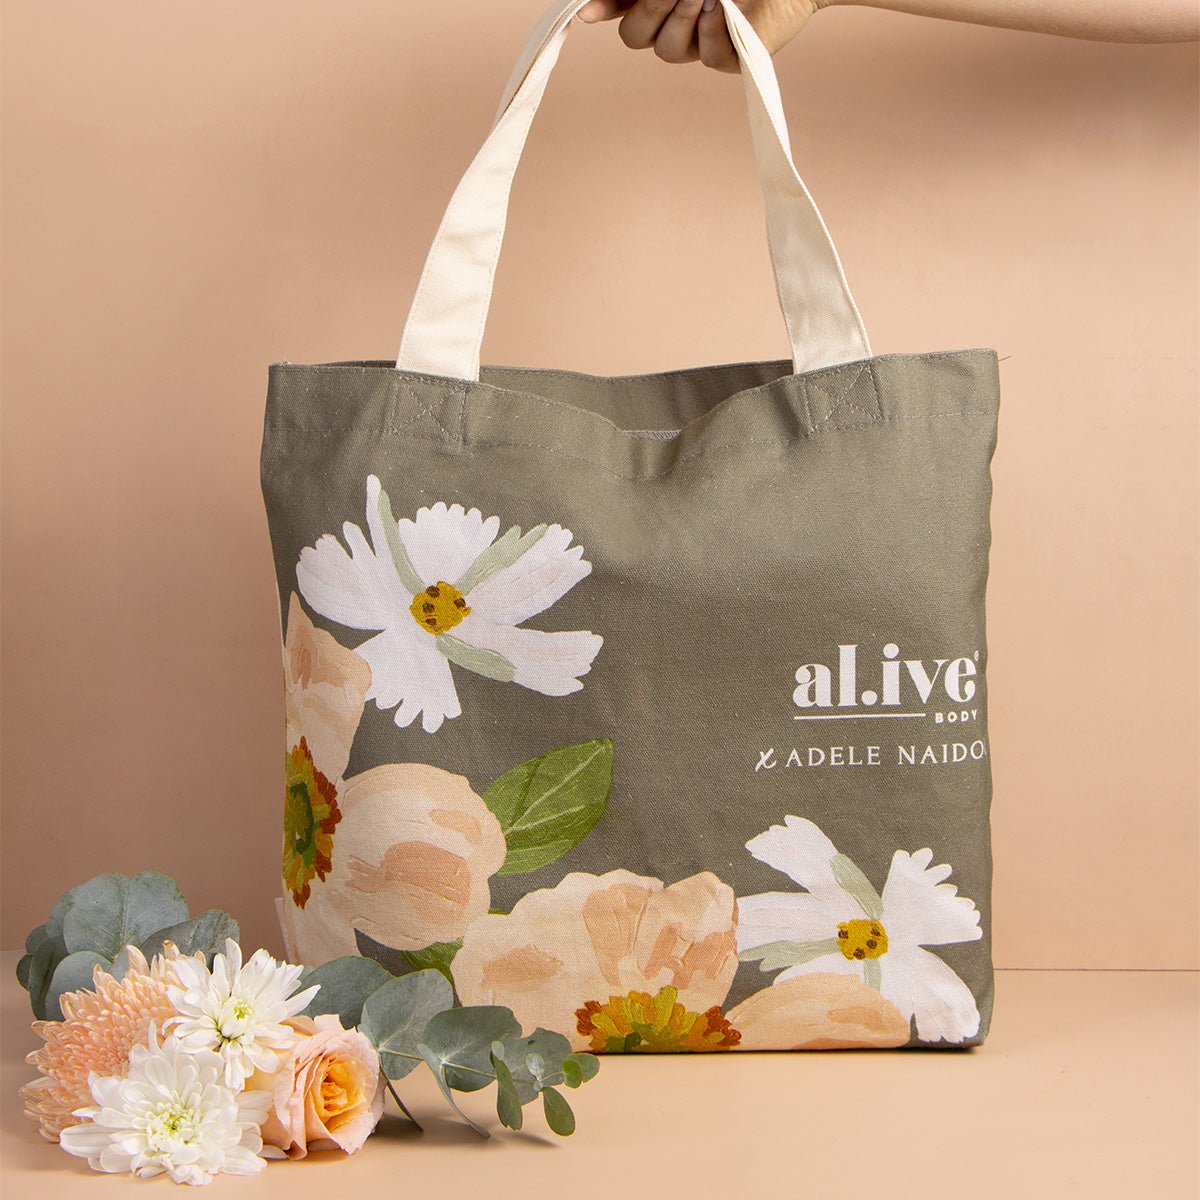 alive body - adele-naidoo tote | alive body | the ivy plant studio 